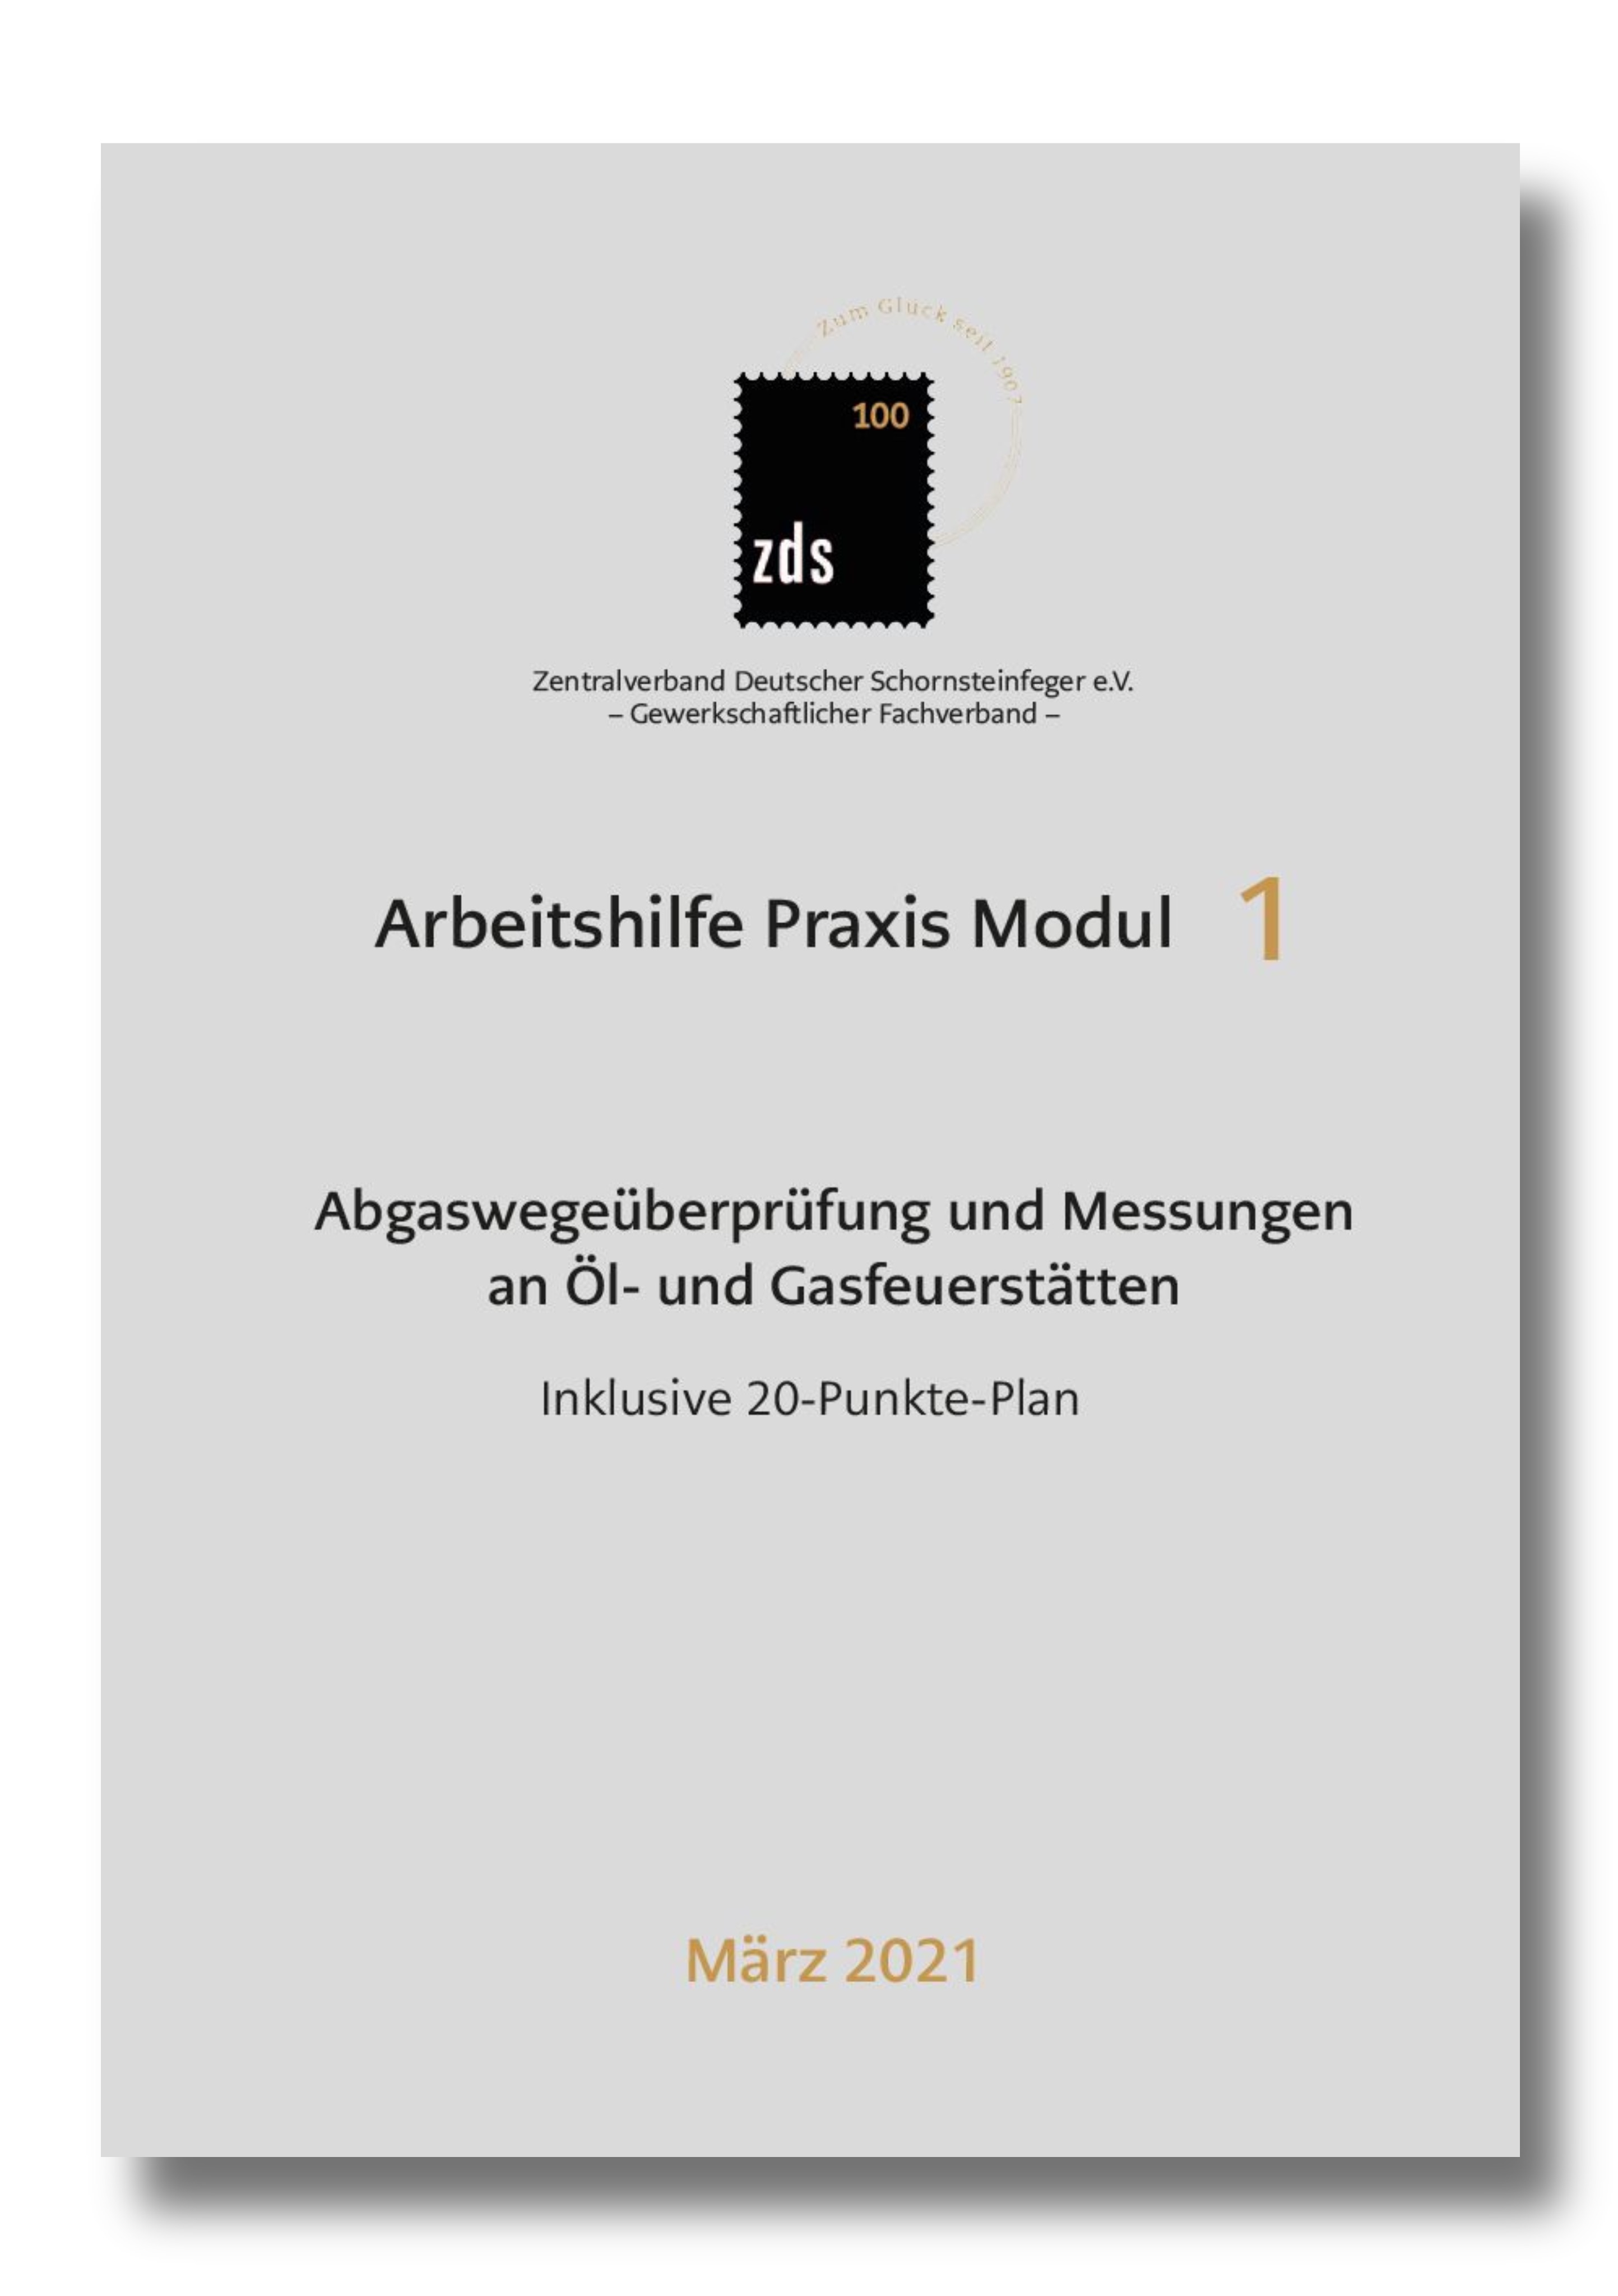 ZDS AH P Modul 1 – Abgaswegeüberprüfung und Messungen an Öl- und Gasfeuerstätten - Inklusive 20-Punkte-Plan